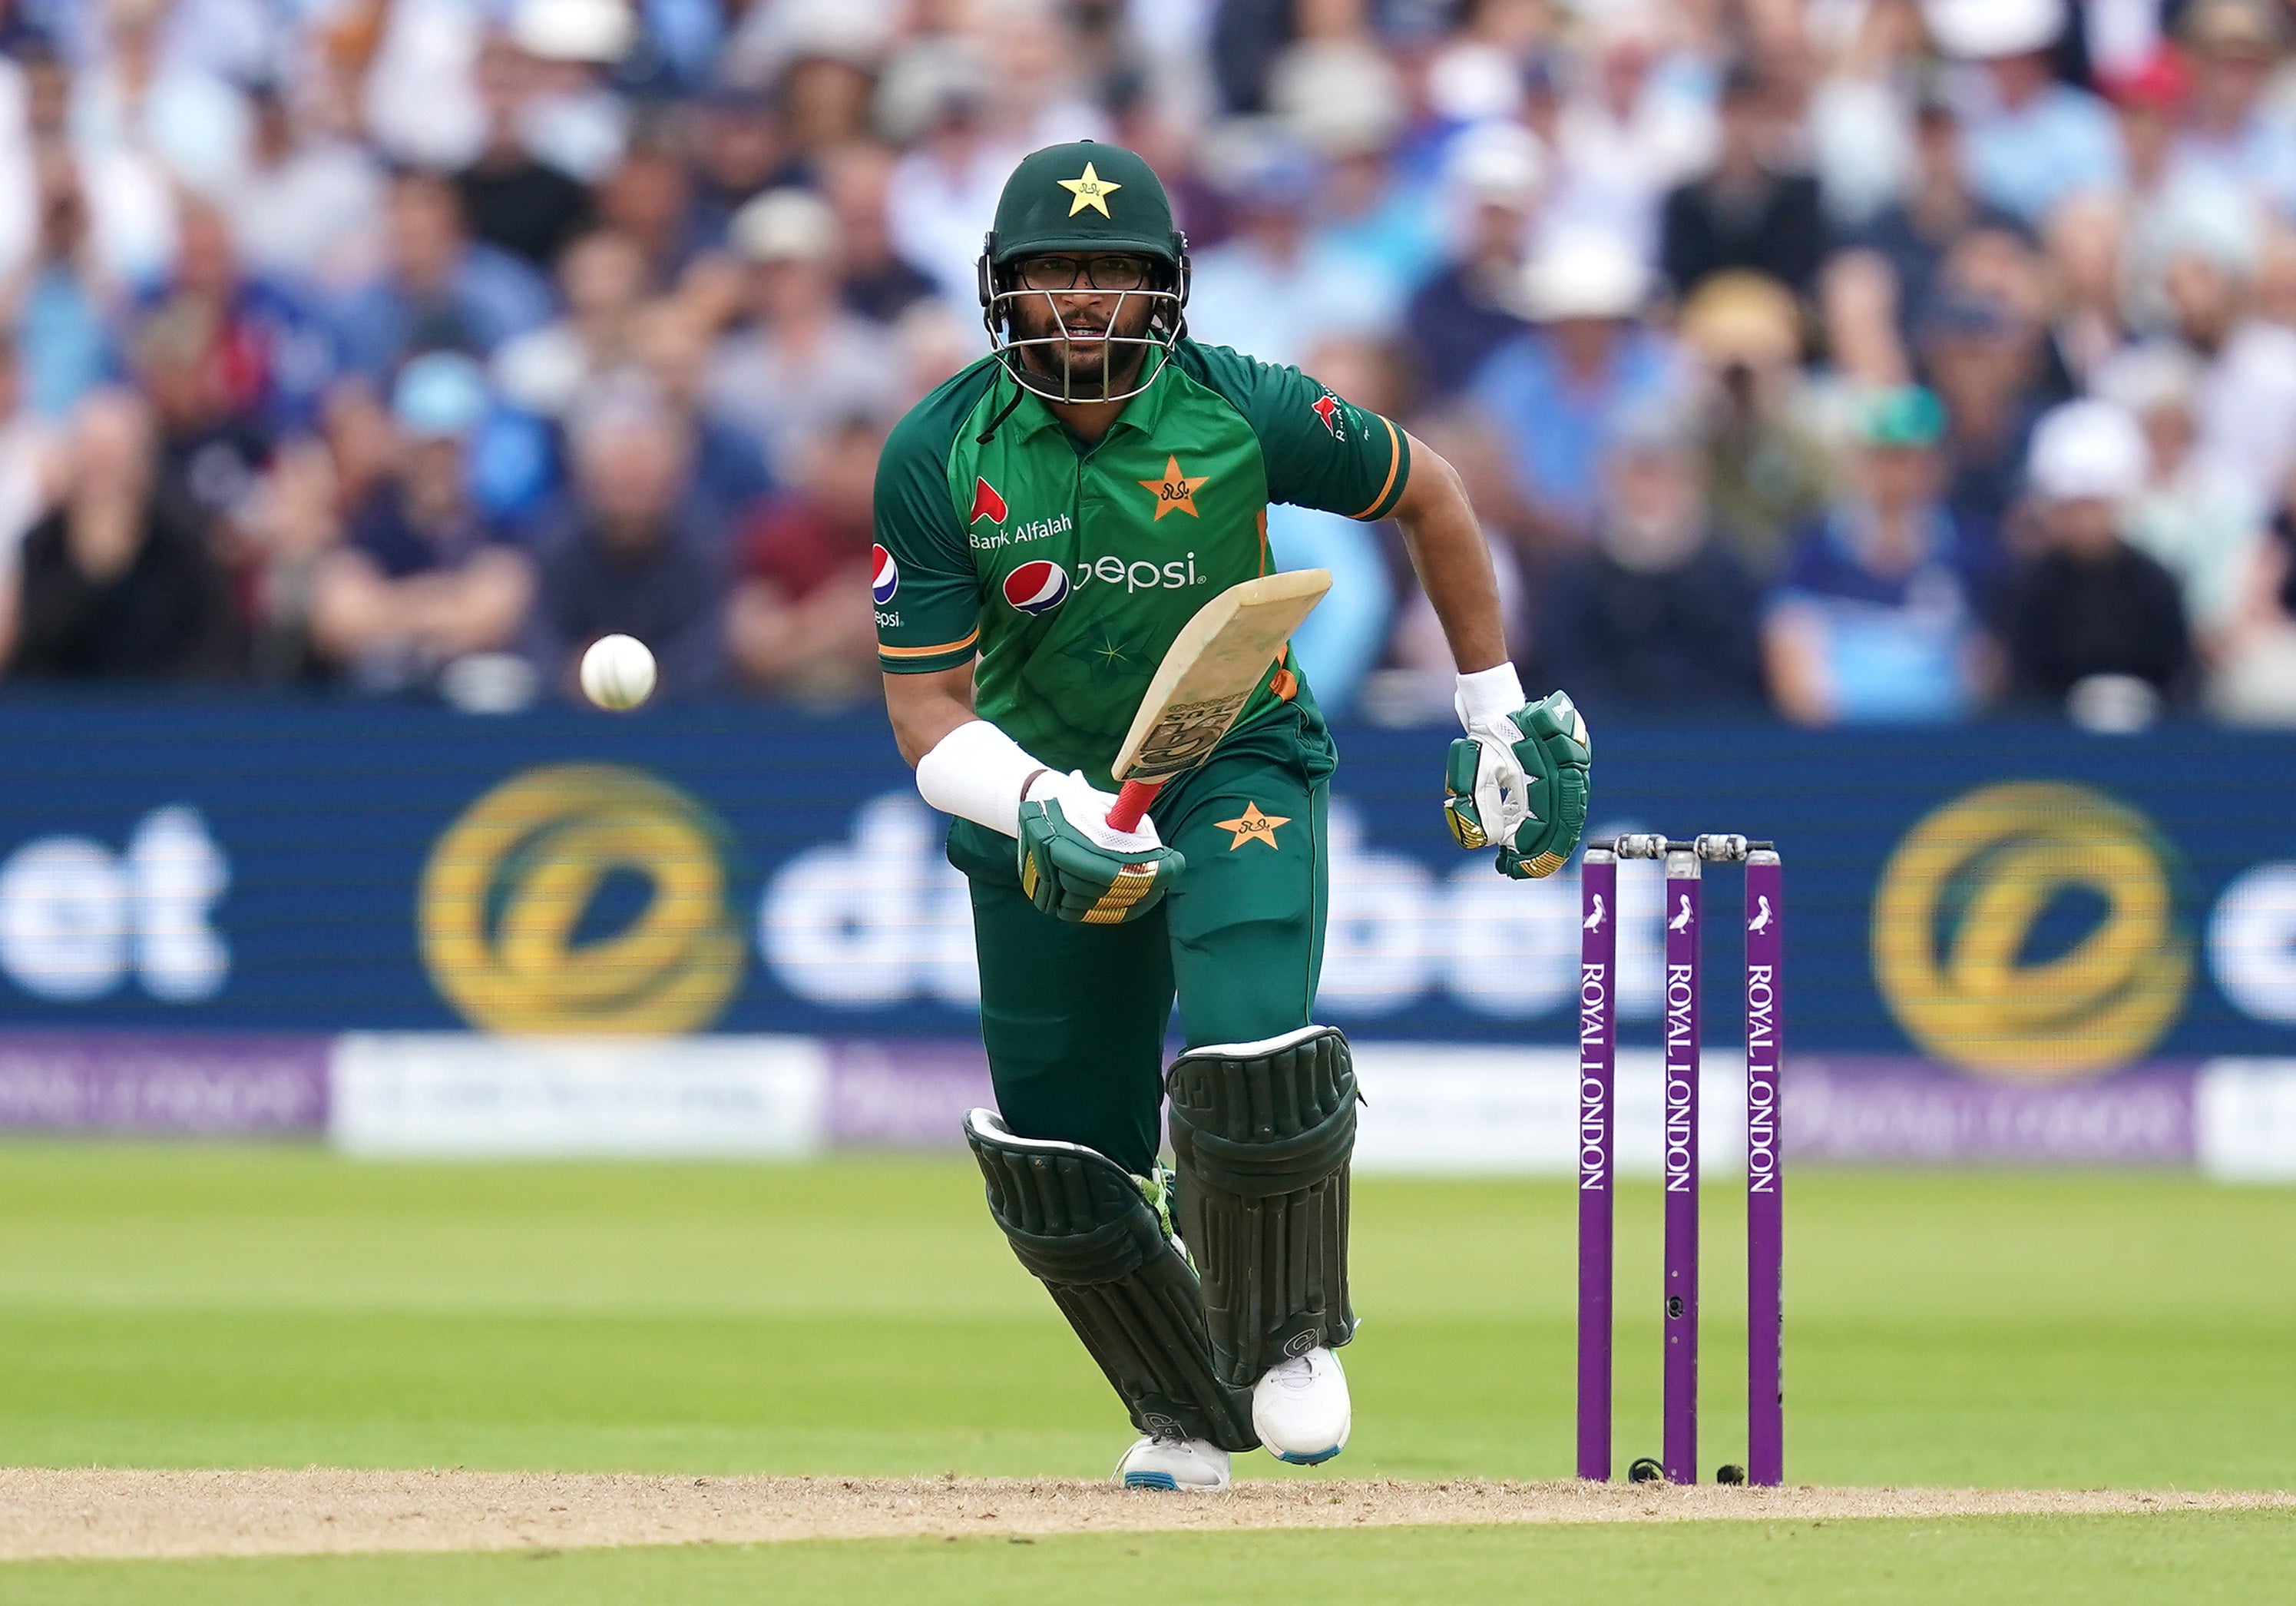 Pakistan’s Imam-ul-Haq hit 90 on his Somerset debut (Martin Rickett/PA)